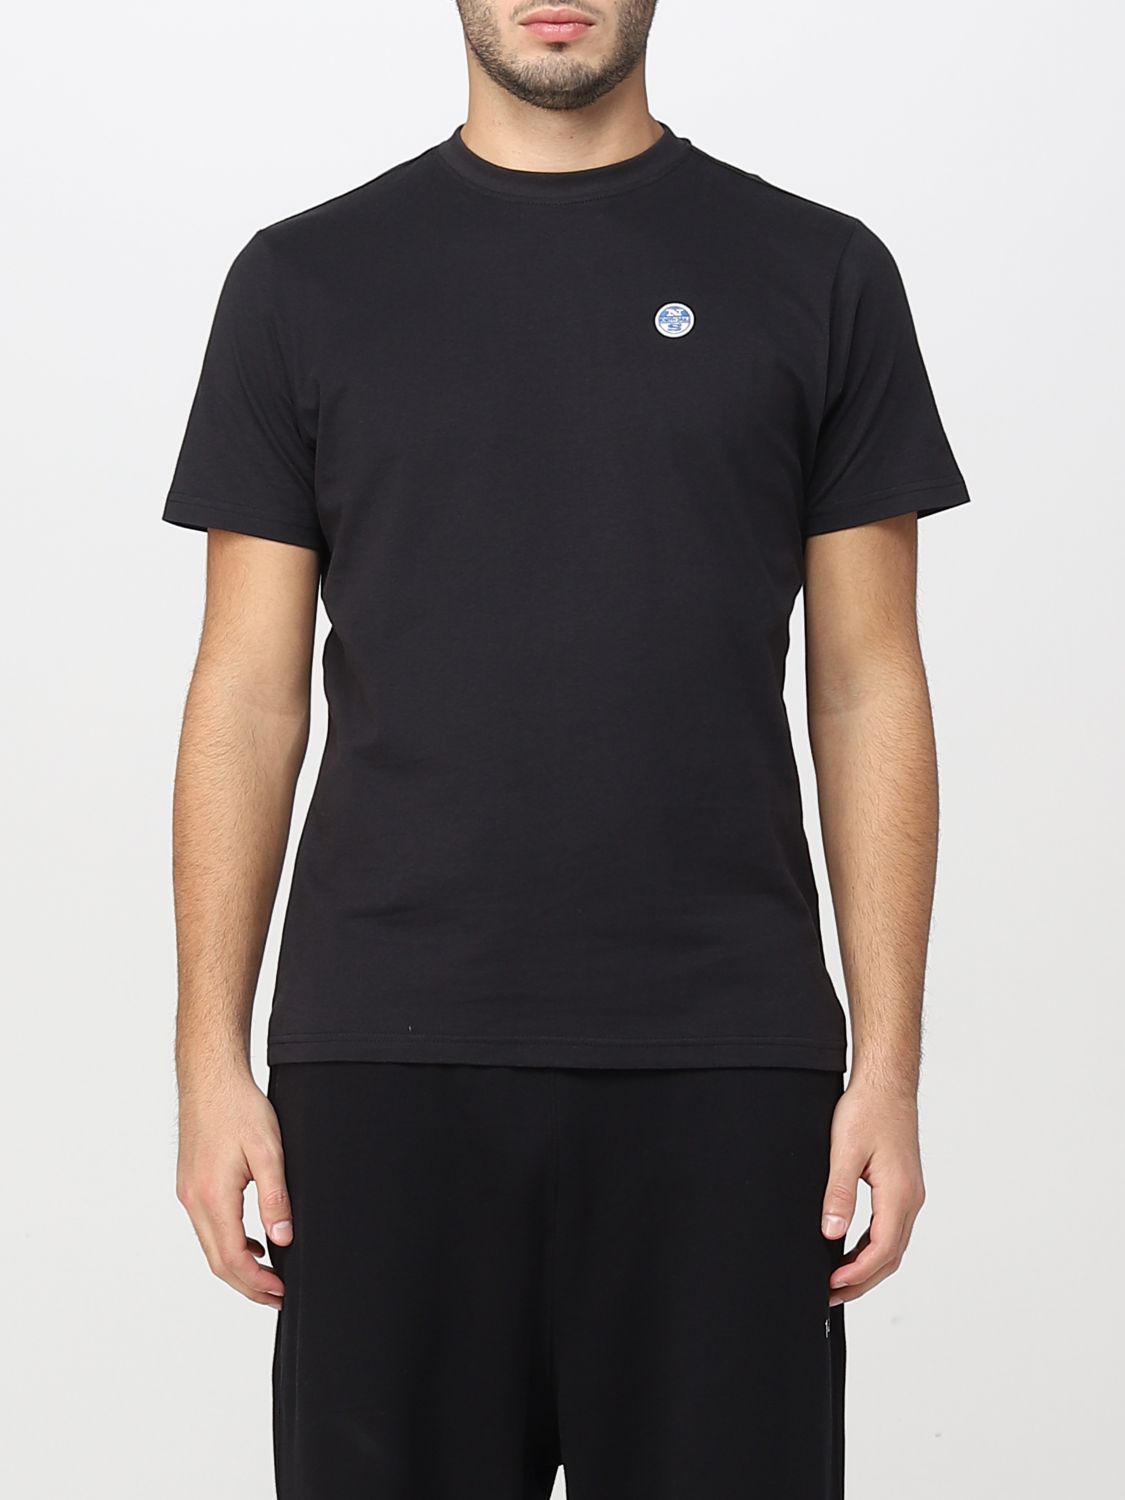 NORTH SAILS: t-shirt for man - Black | North Sails t-shirt 692812 ...